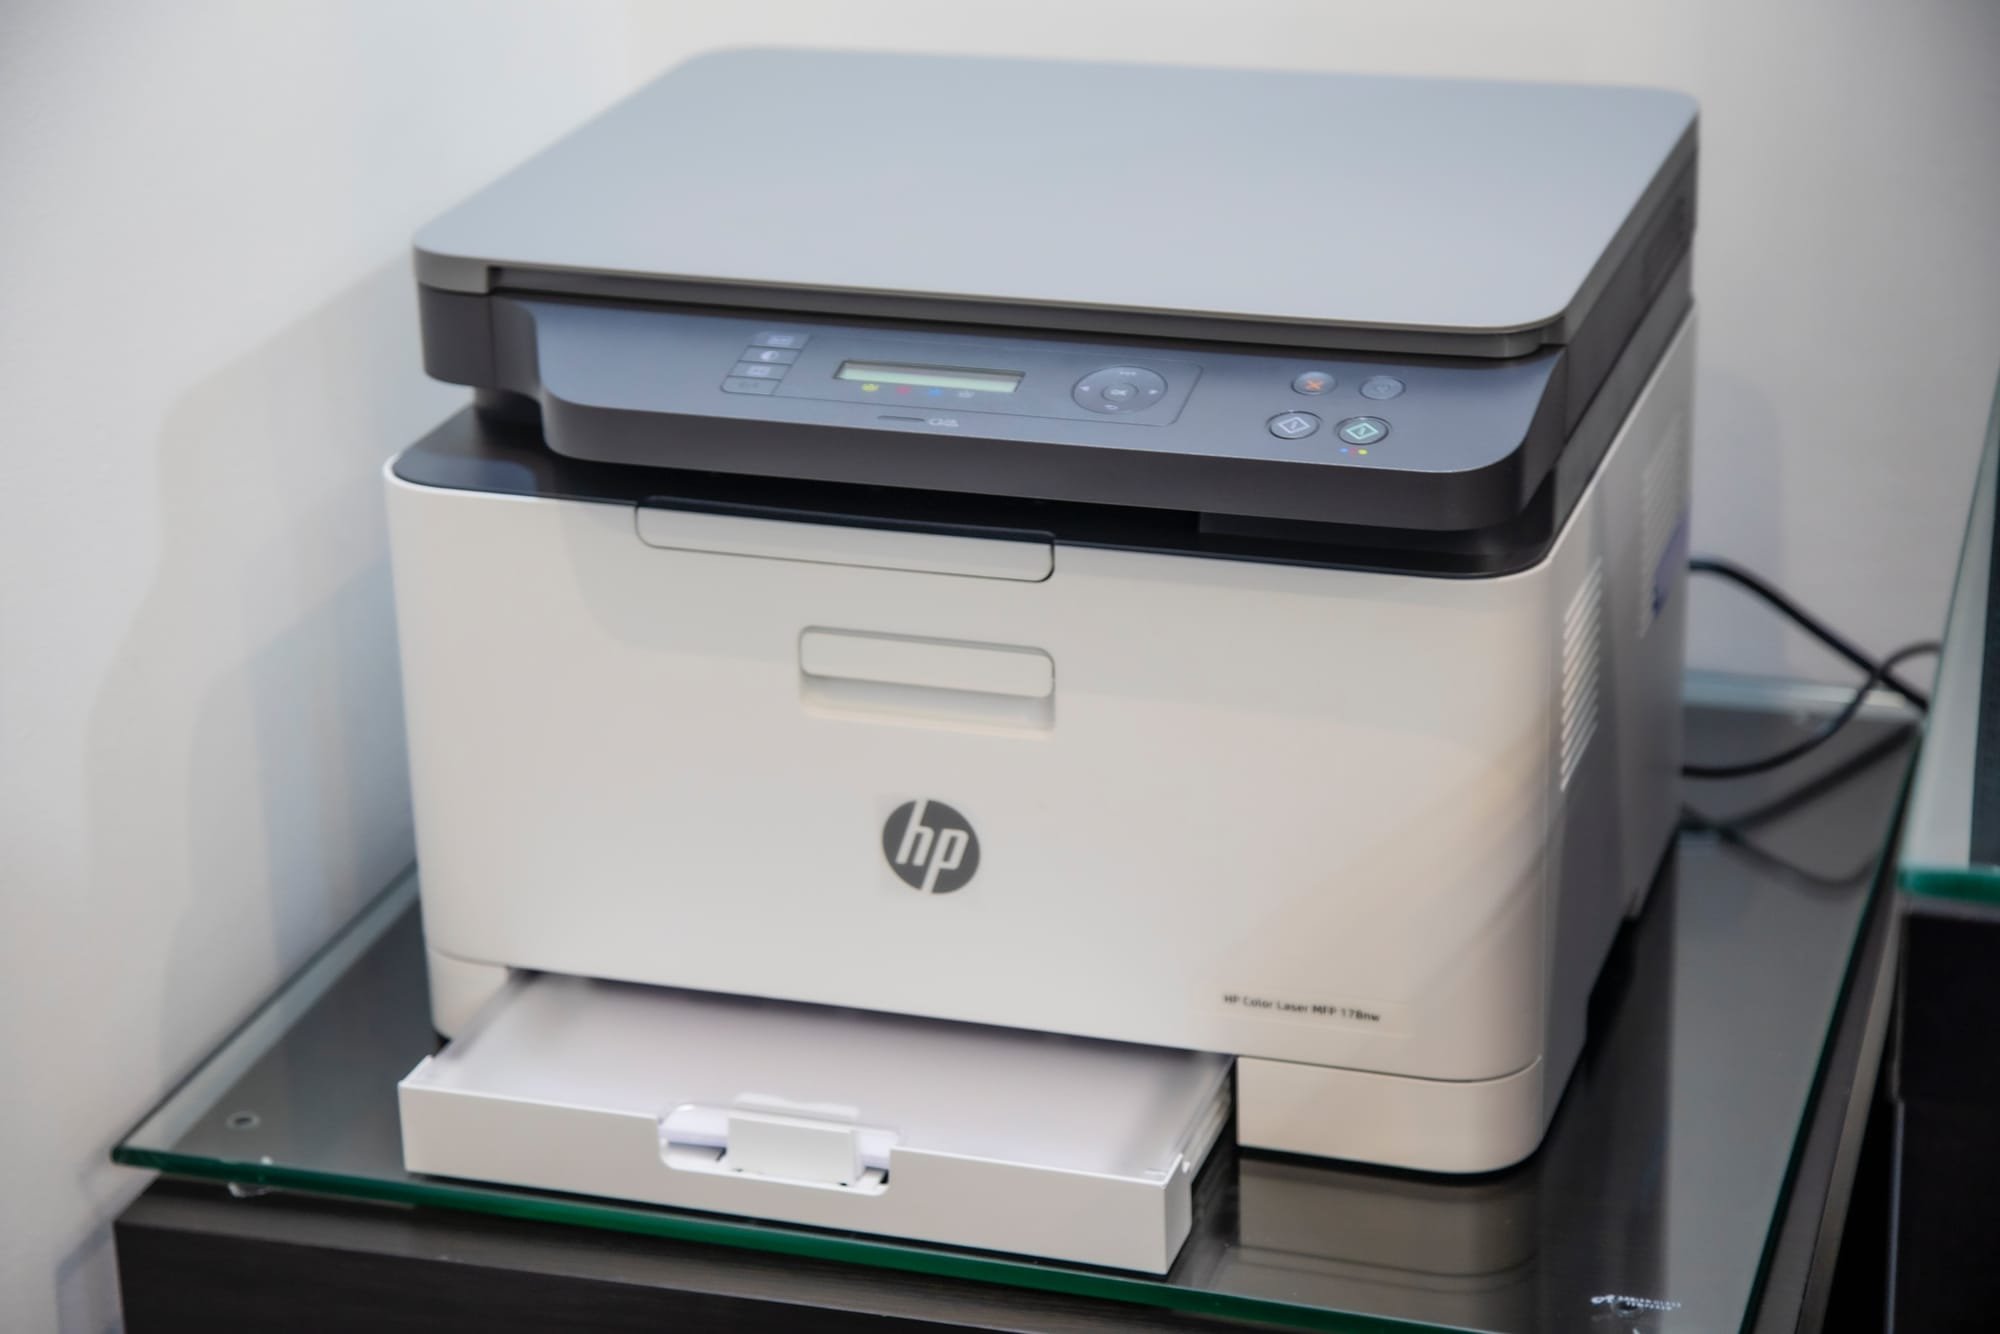 Why My HP Printer Not Printing?